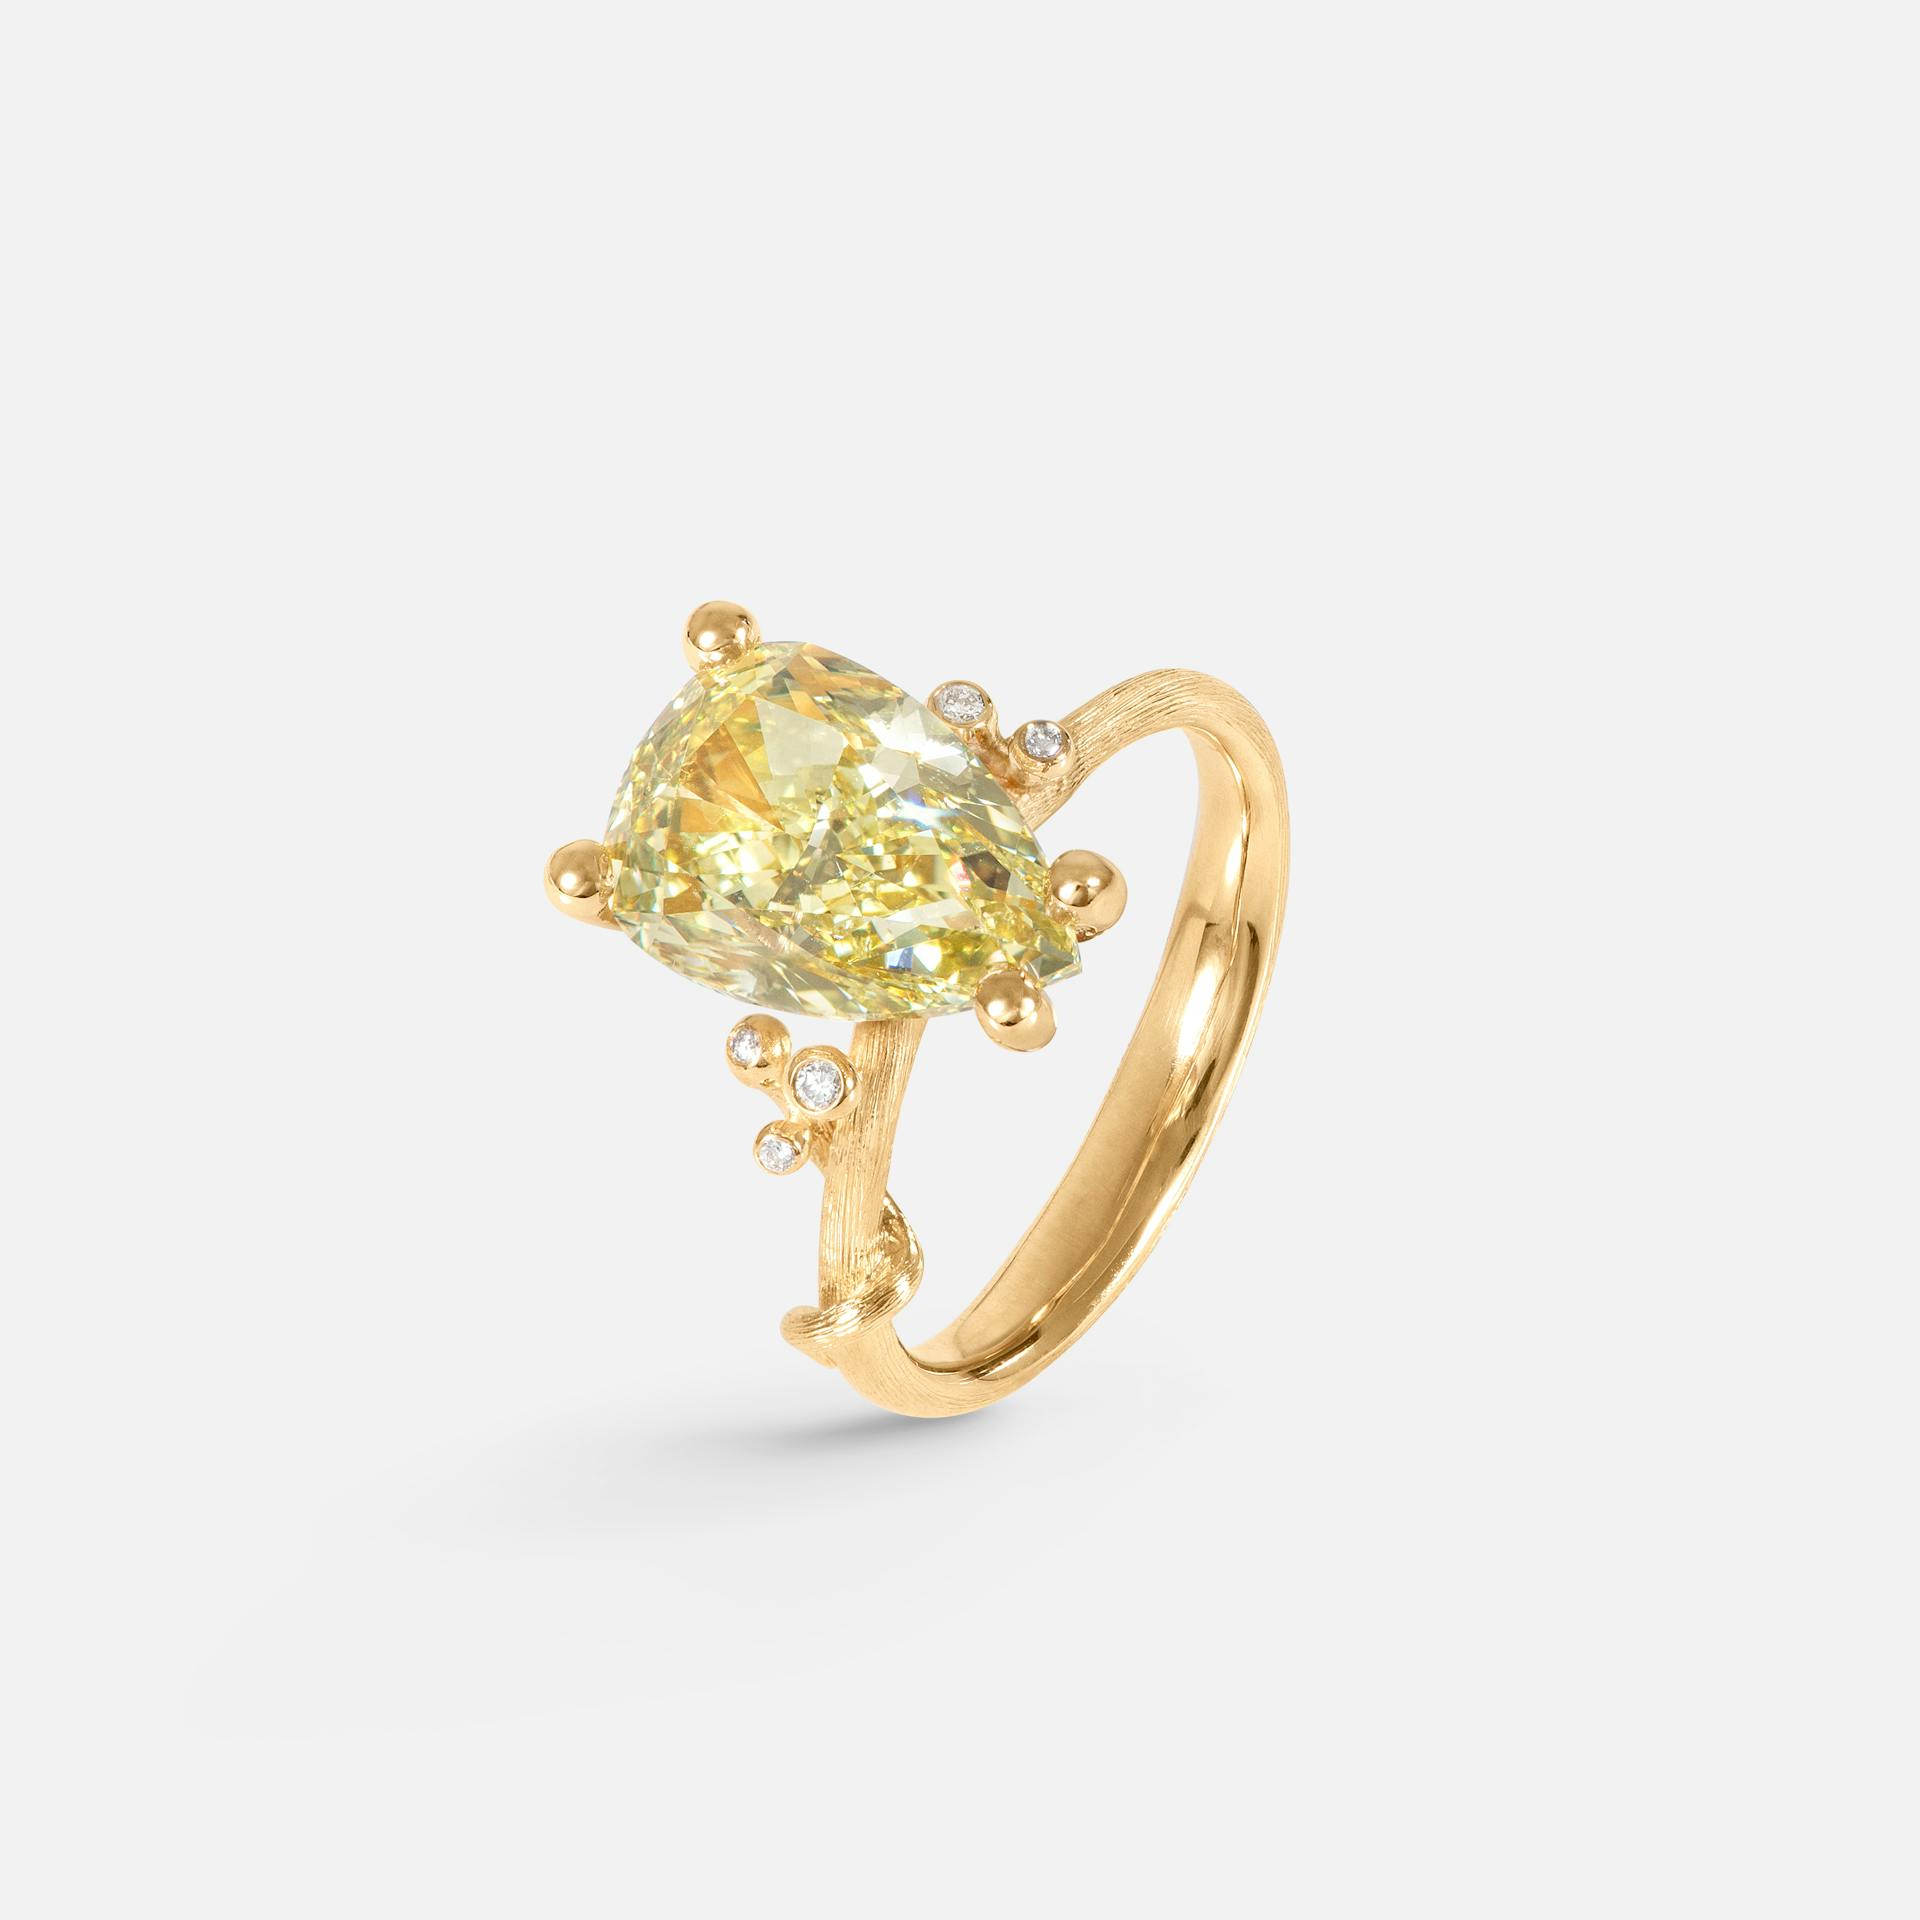 Nature solitaire UNIQUE yellow diamond 18k guld med UNIKA fancy intens gul pæreformet diamant og 5 diamanter i alt 5,04 ct. TW.VS.